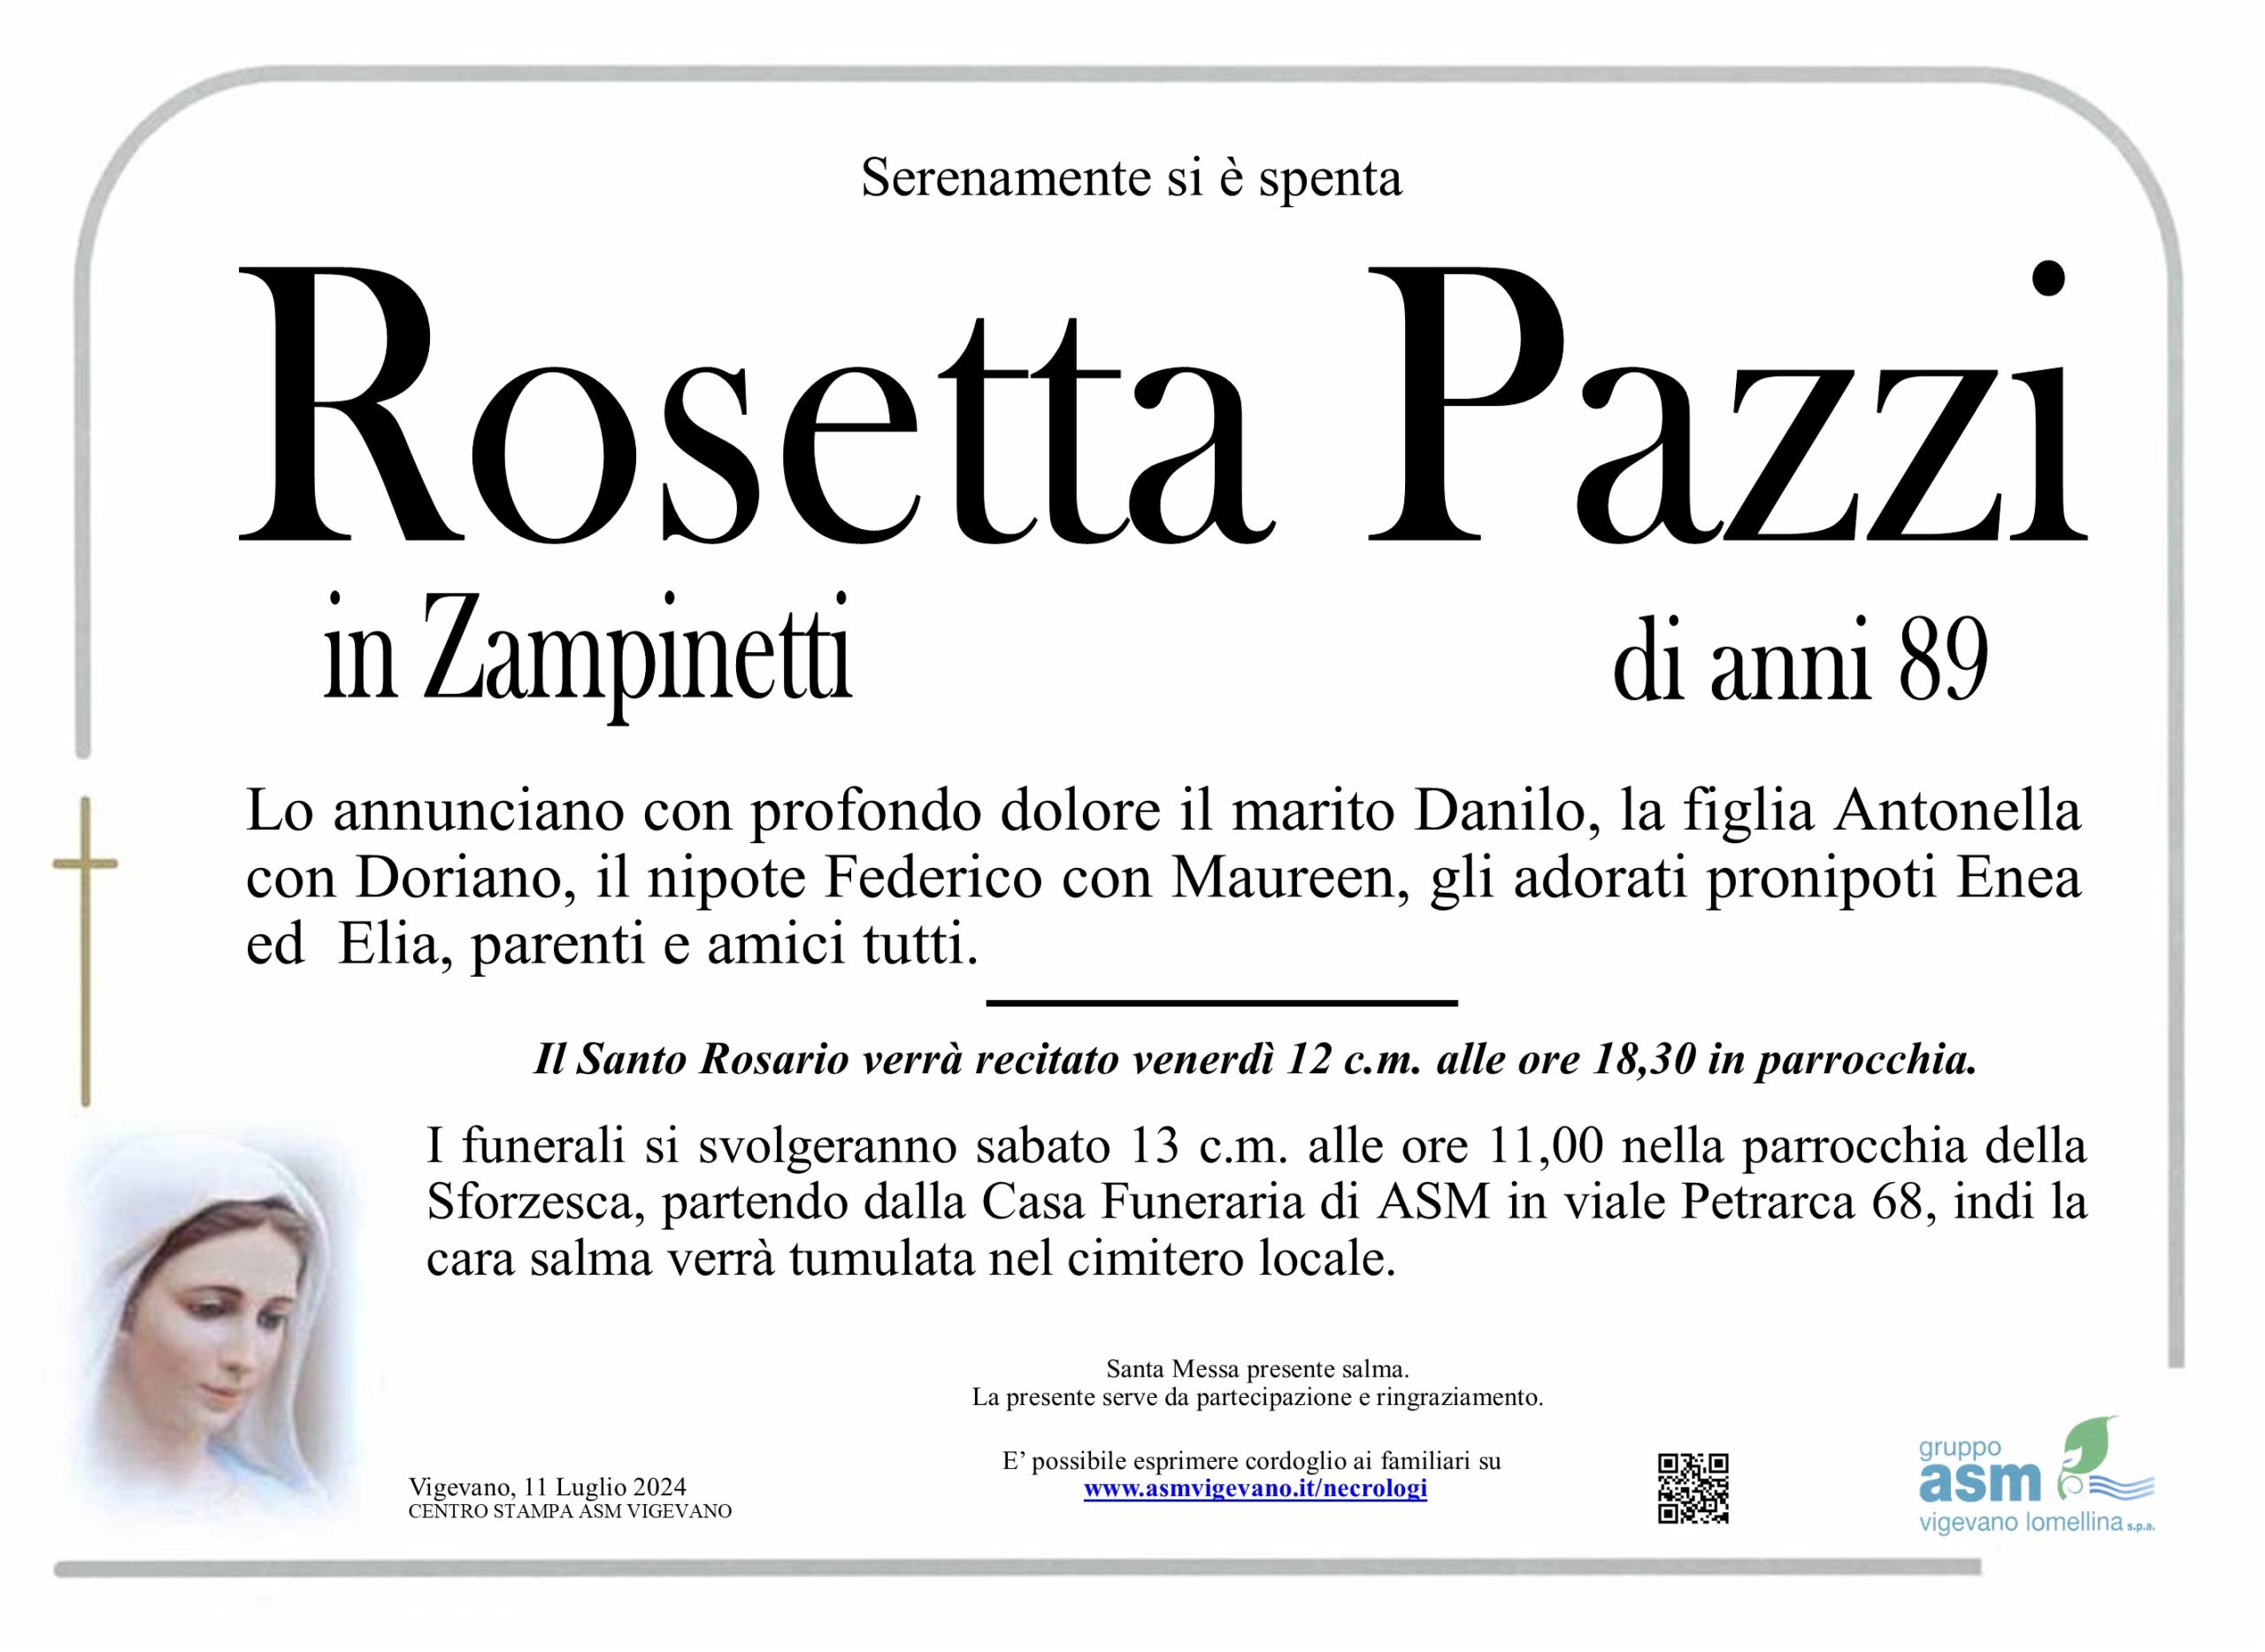 Rosetta Pazzi